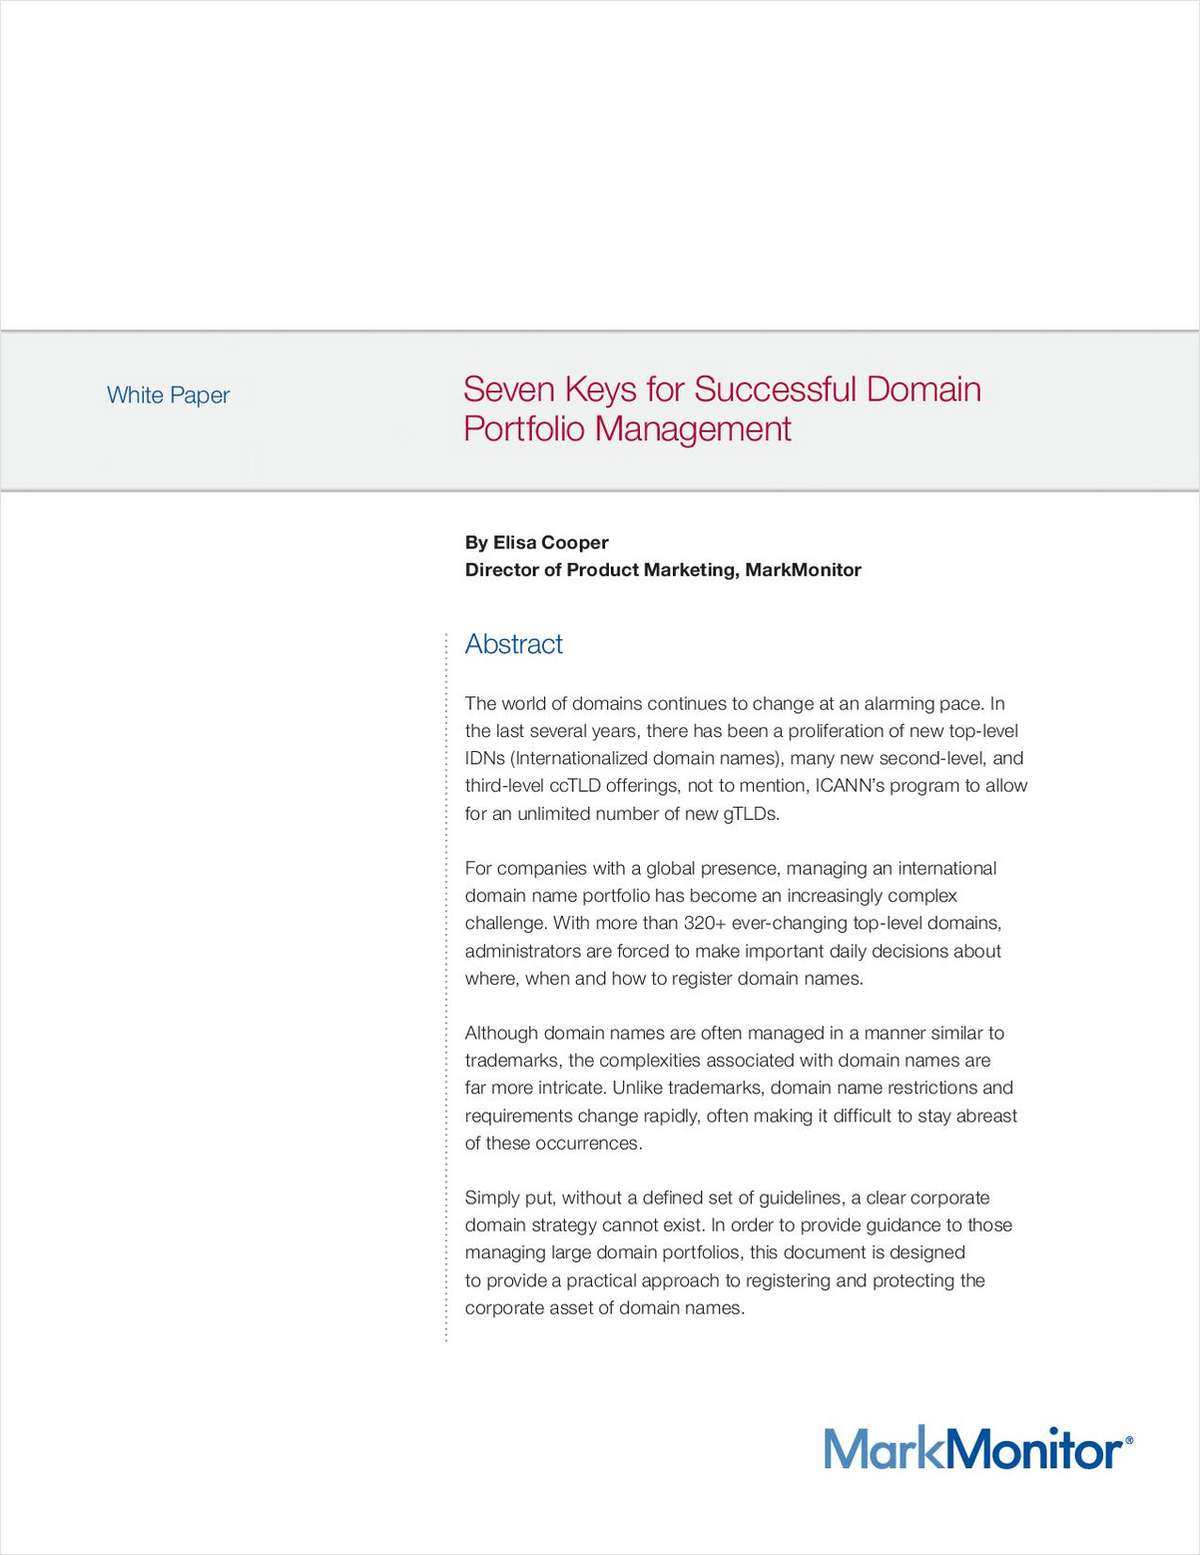 Seven Keys to Successful Domain Portfolio Management